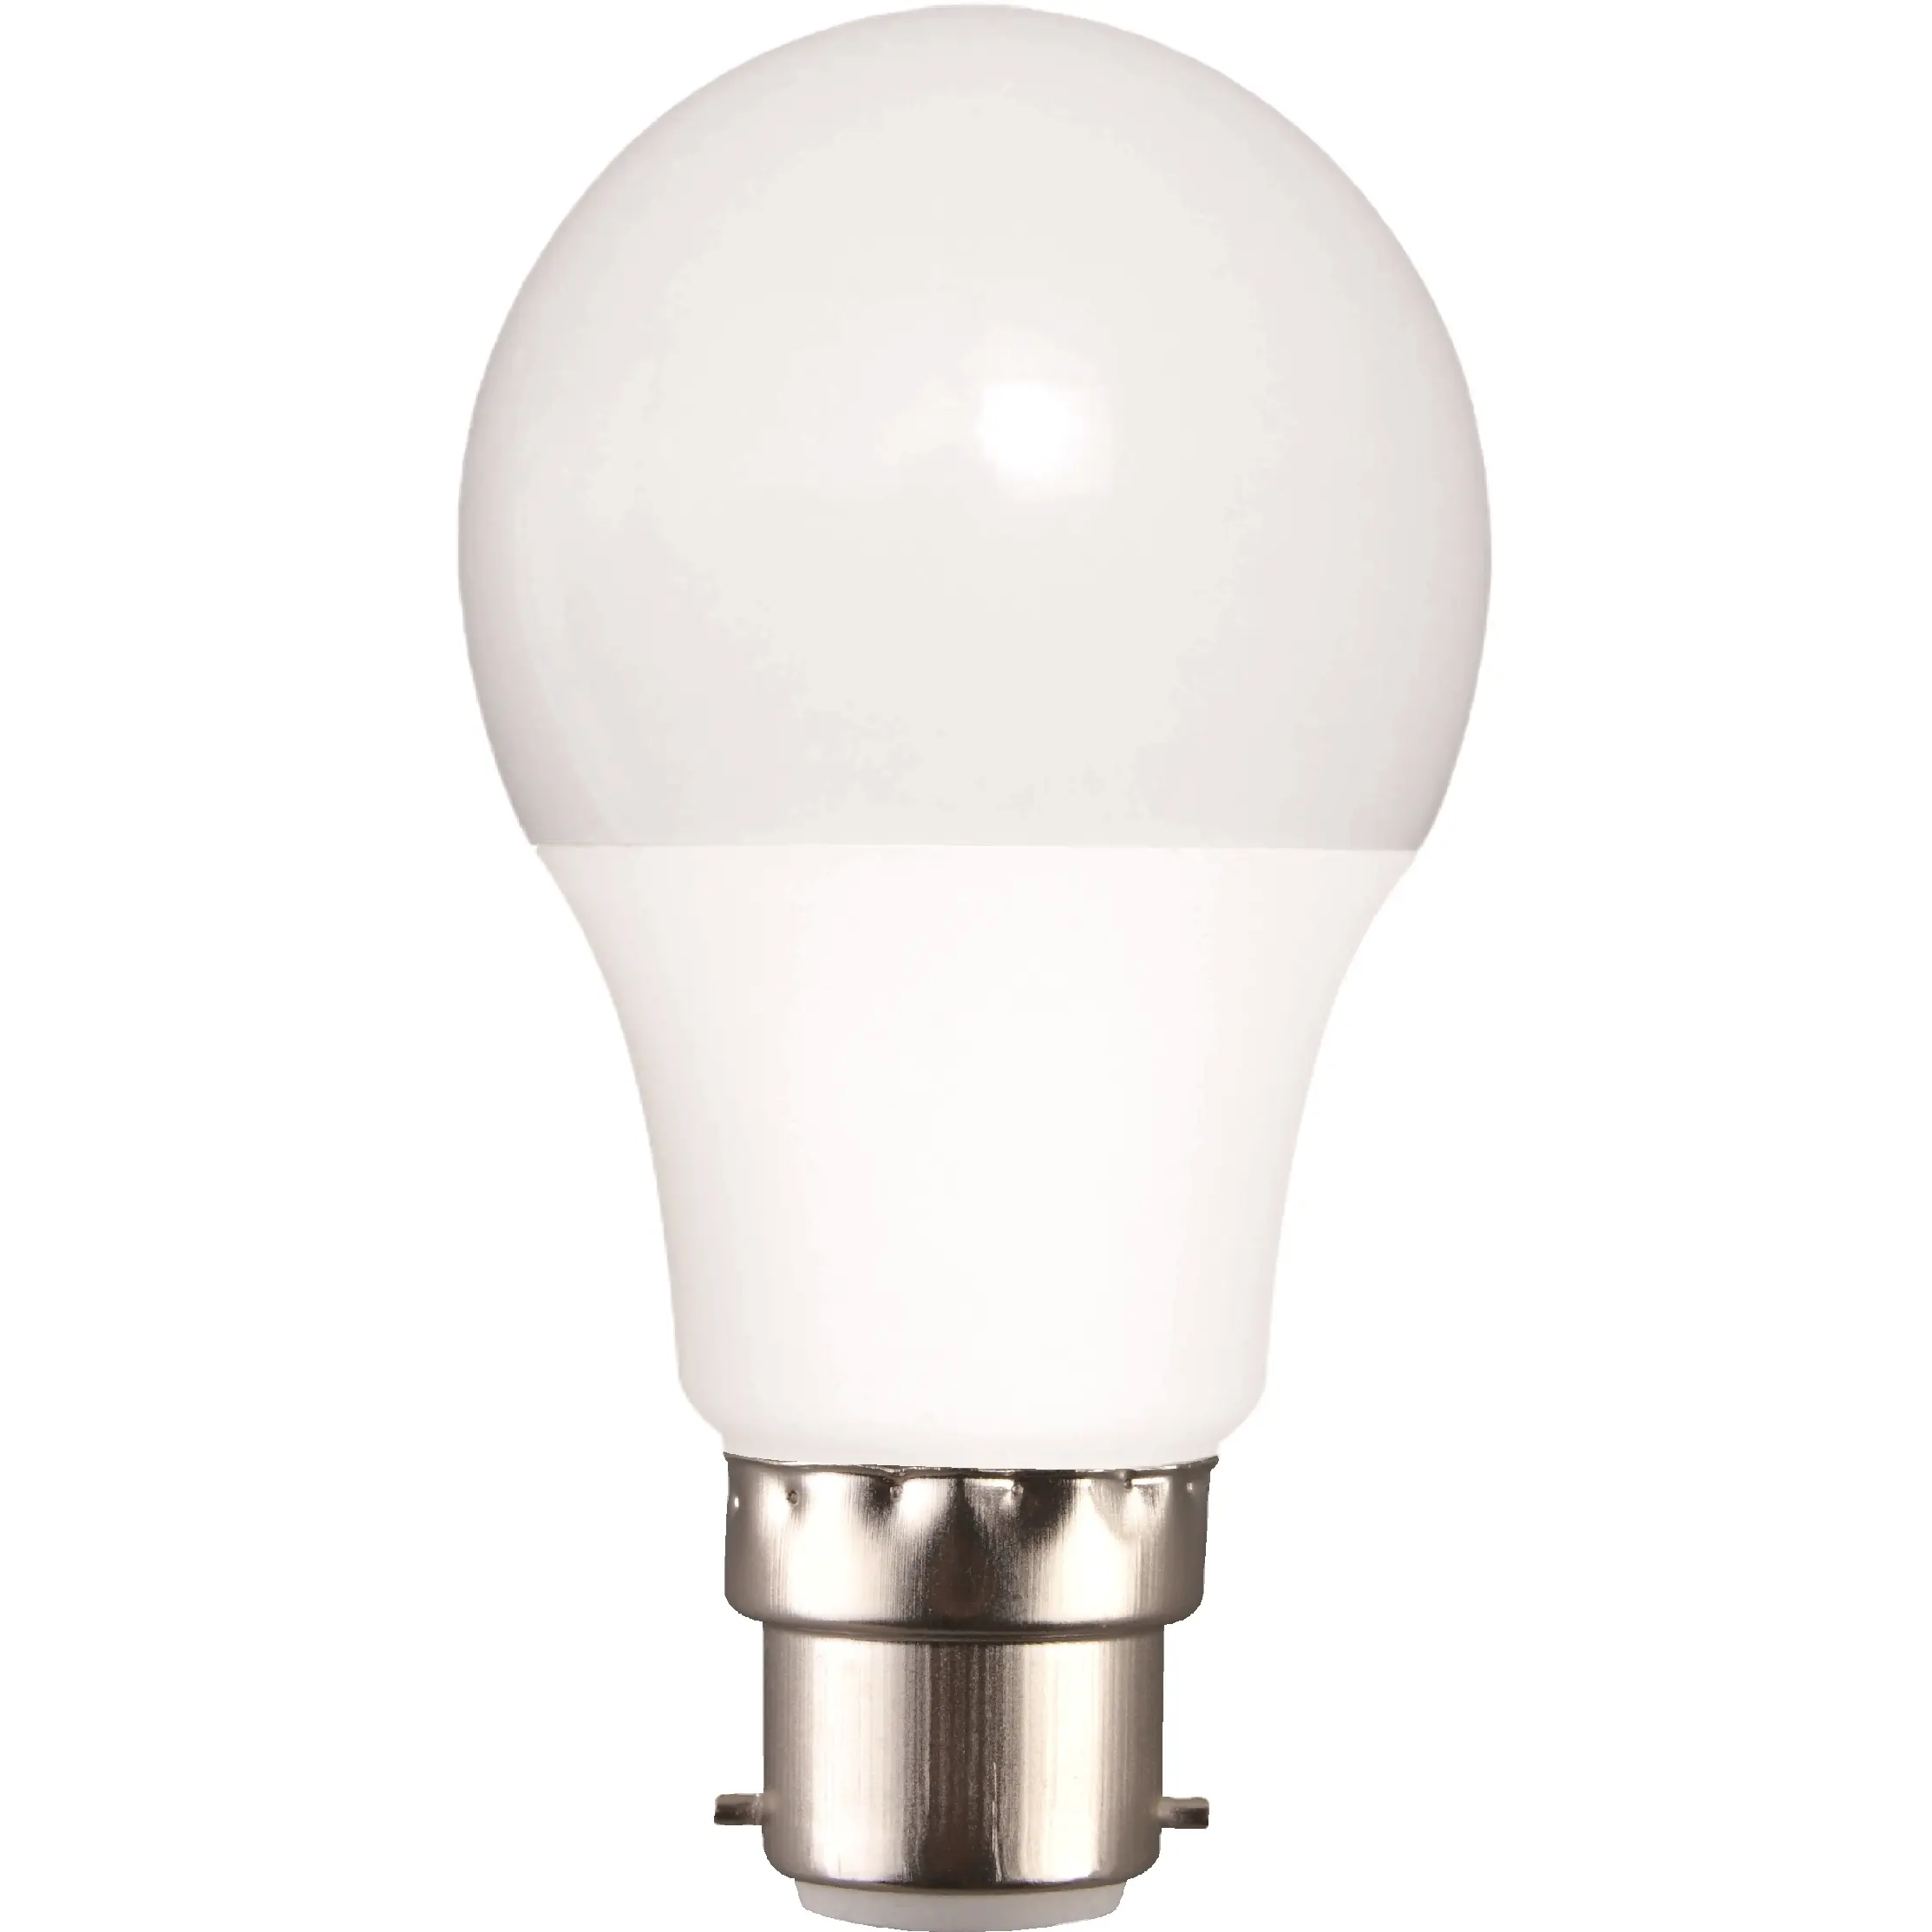 Hot Selling Lighting And Circuitry Design Led B27 Bulb Lamp